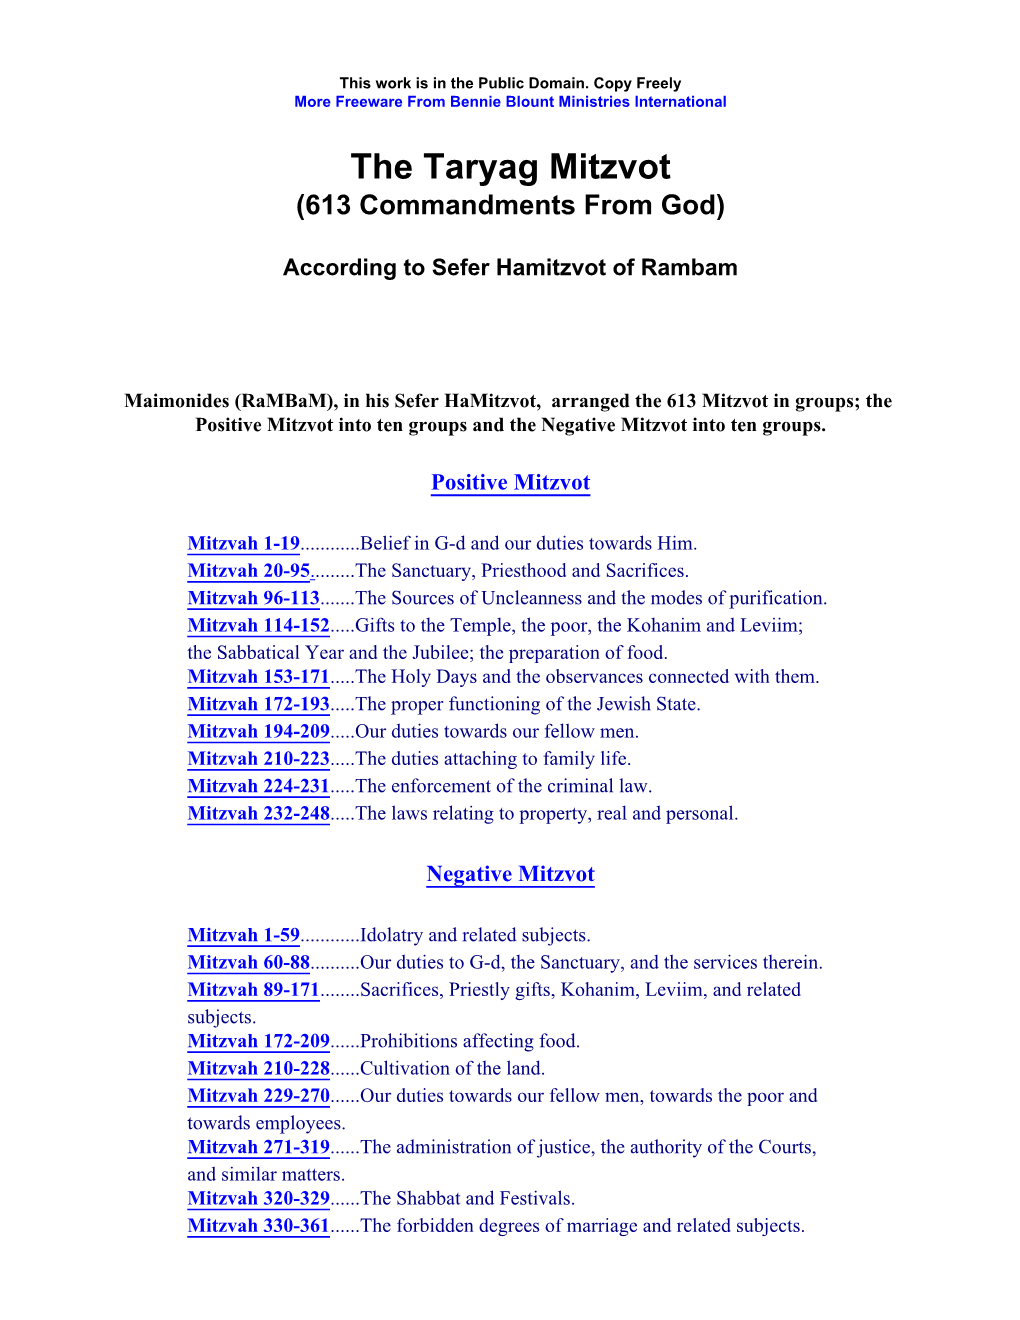 The Taryag Mitzvot (613 Commandments from God)